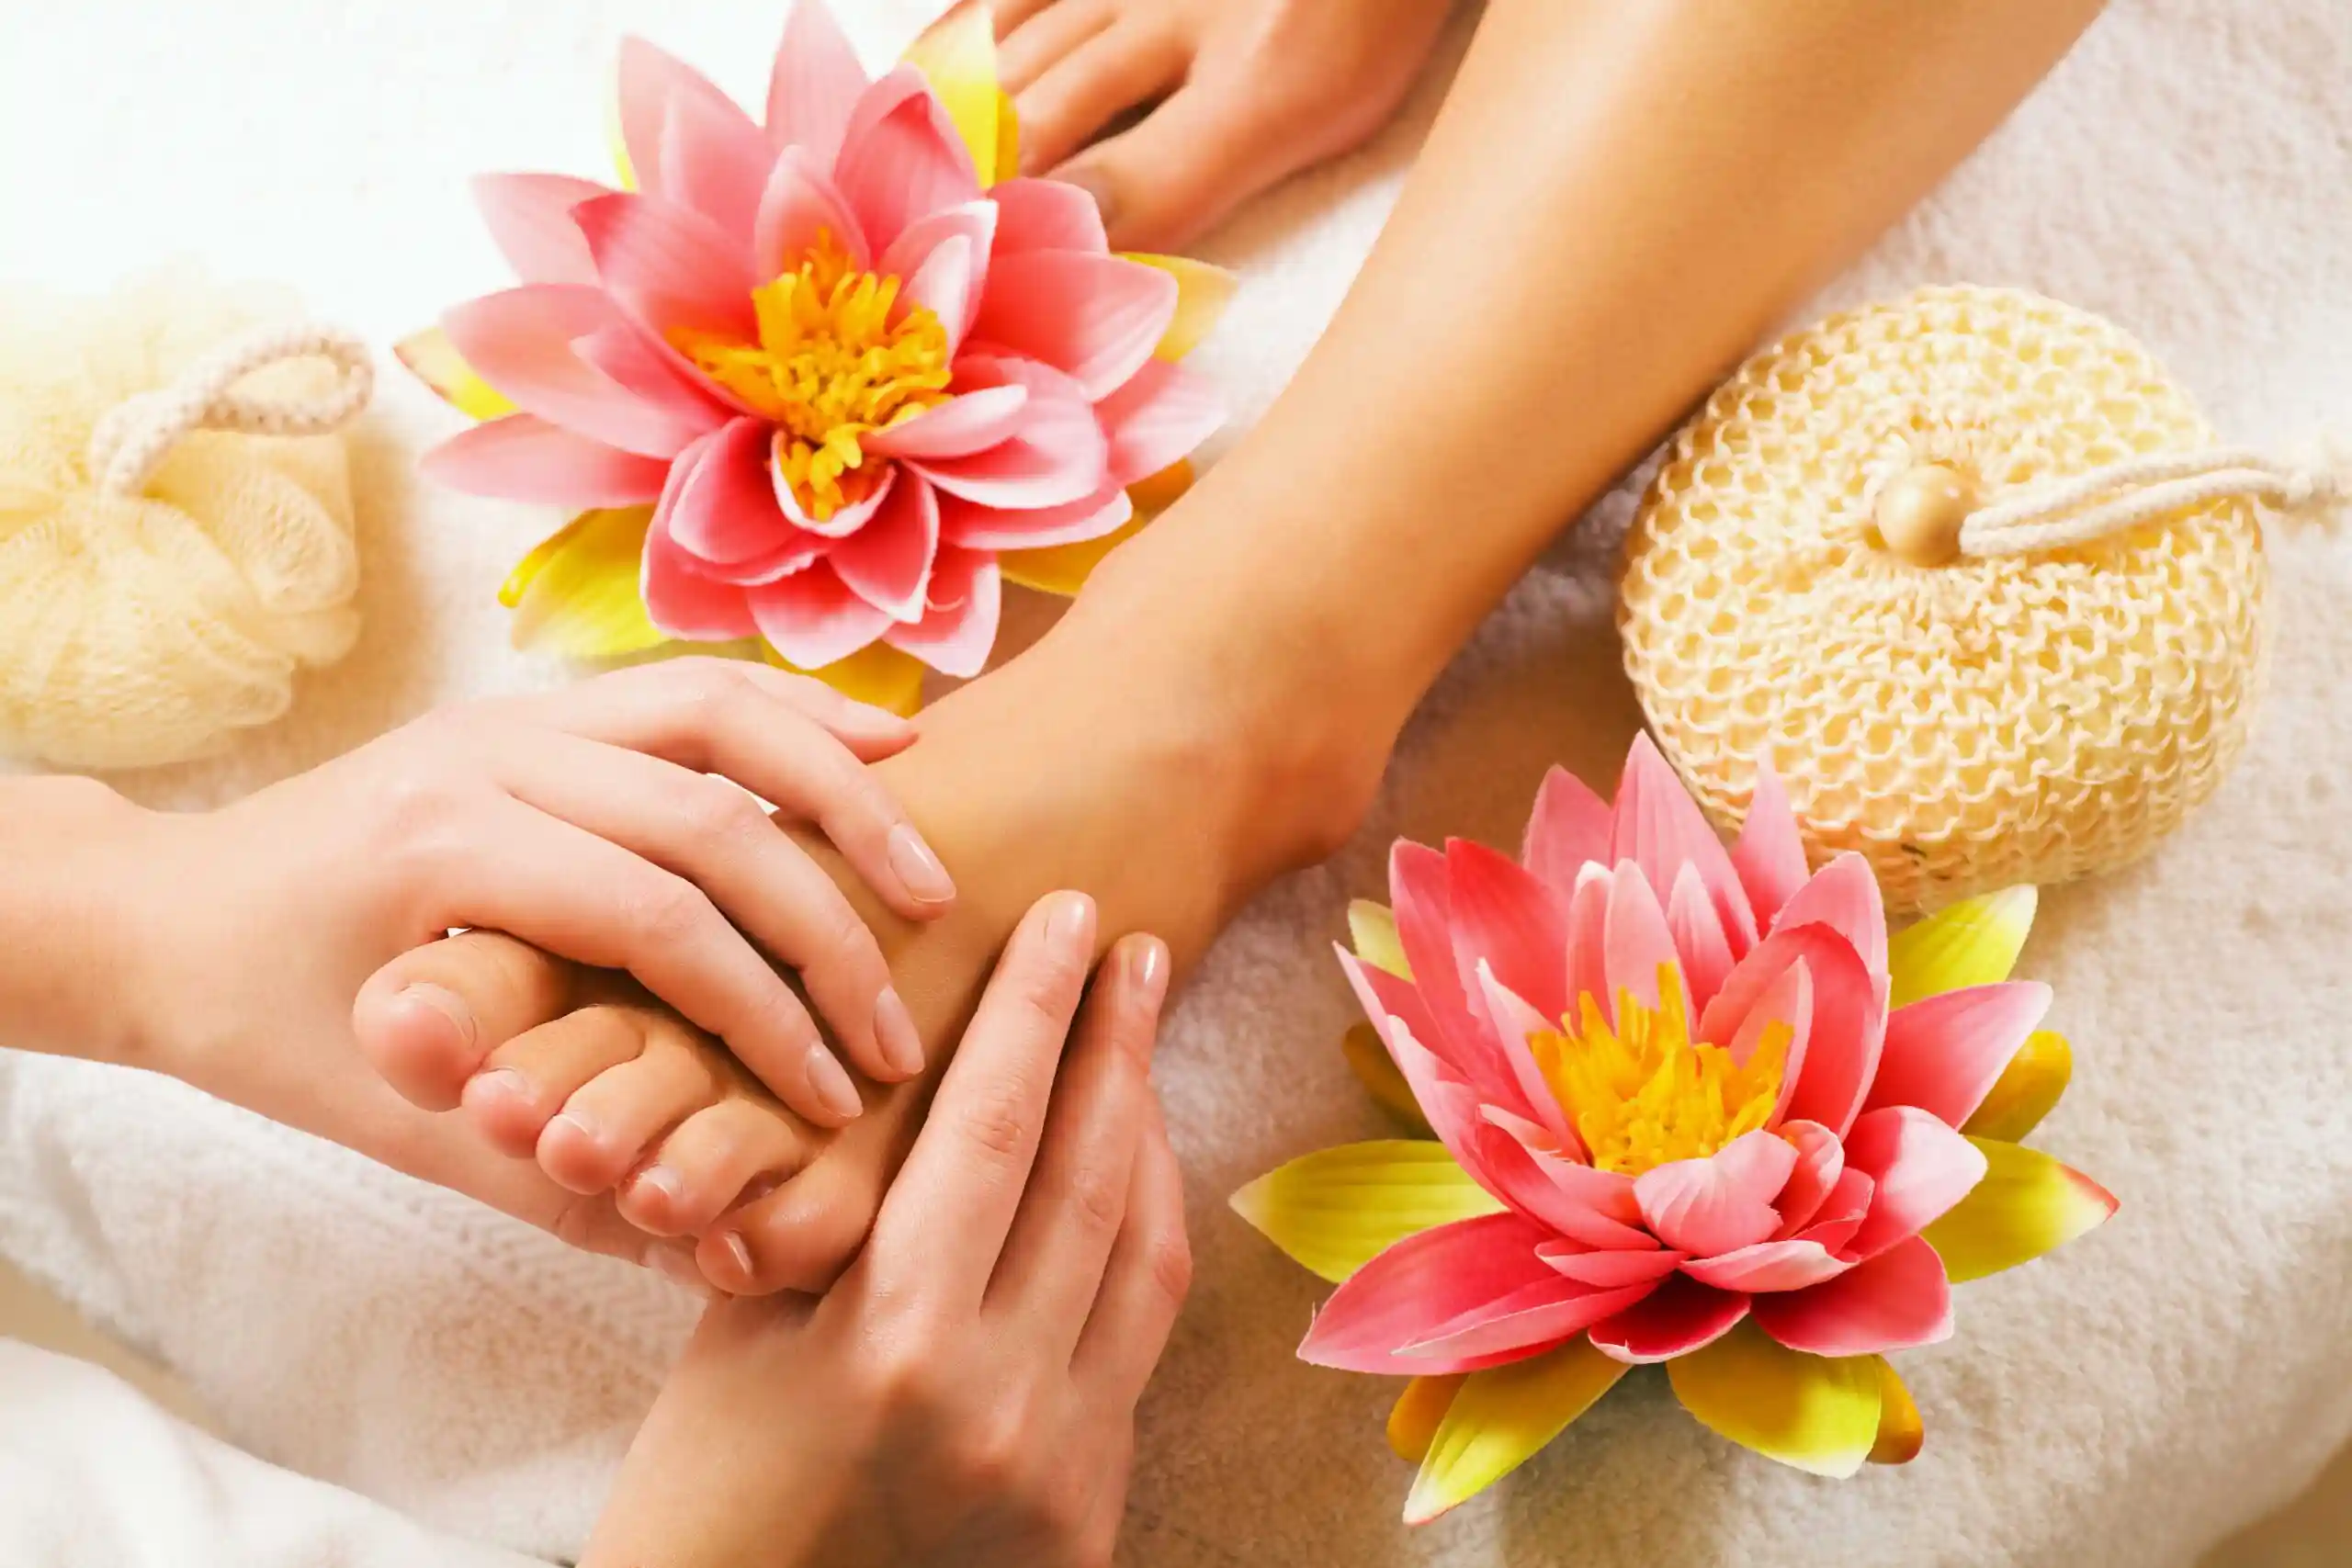 best-foot-Reflexology-full-body-massage-spa-center-chennai-river-day-spa